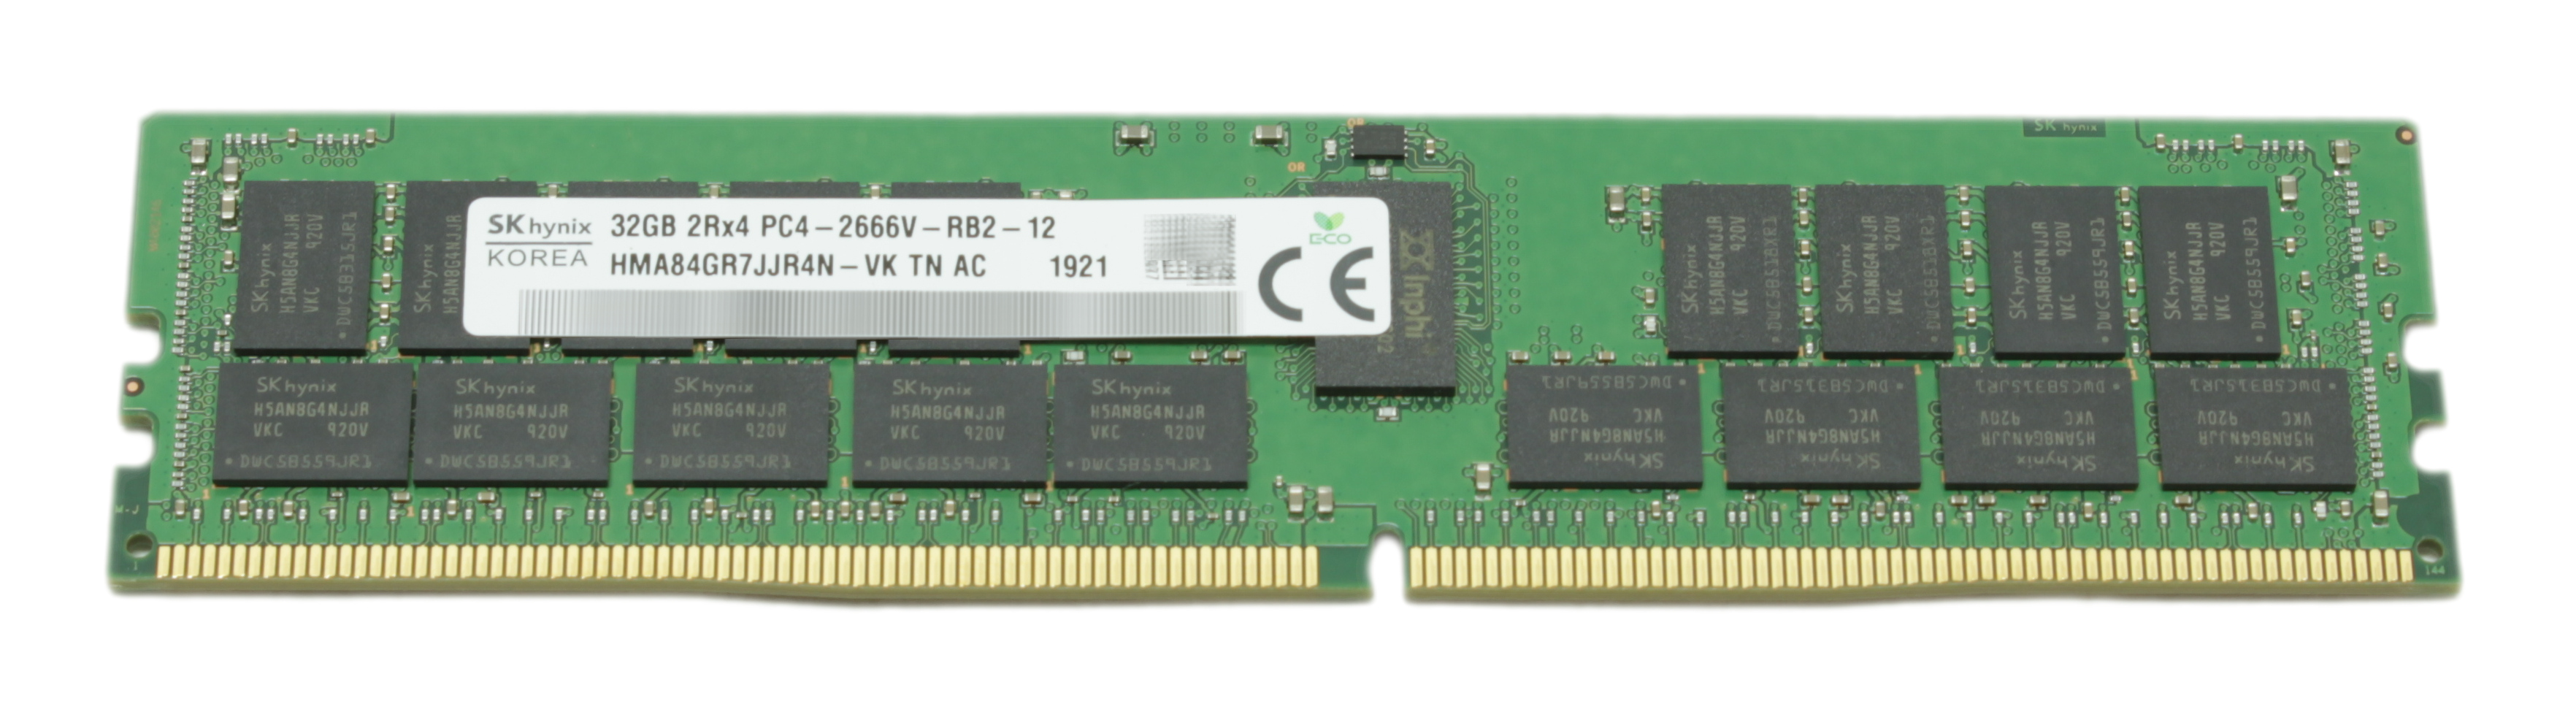 Memory / RAM : Professional Multi Monitor Workstations, Graphics